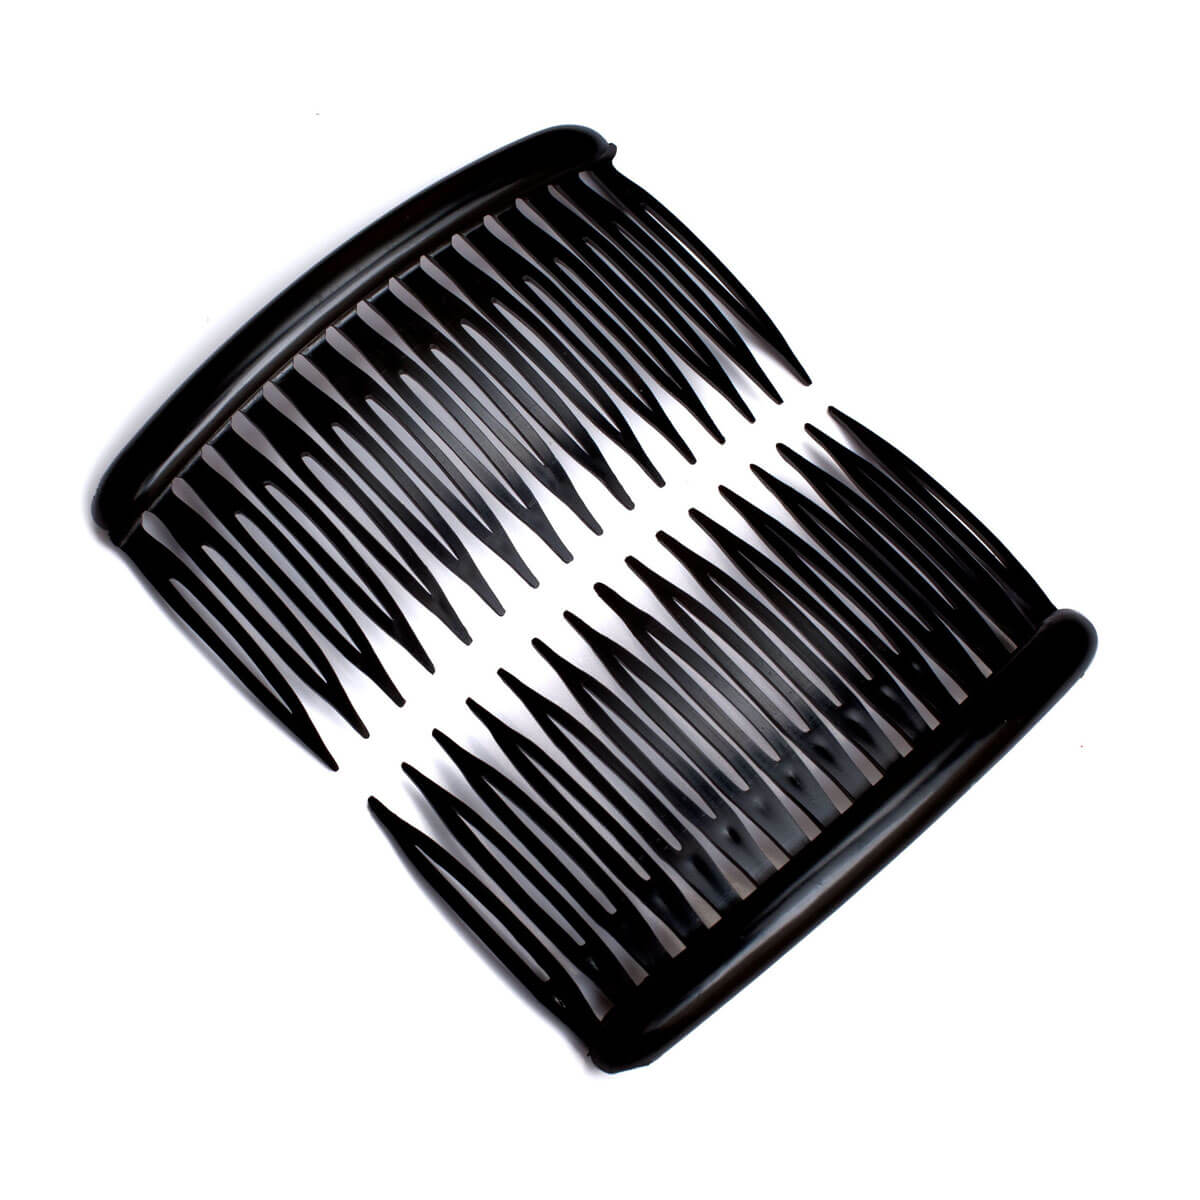 Plastic side comb 2pcs (8cm x 4.7cm)